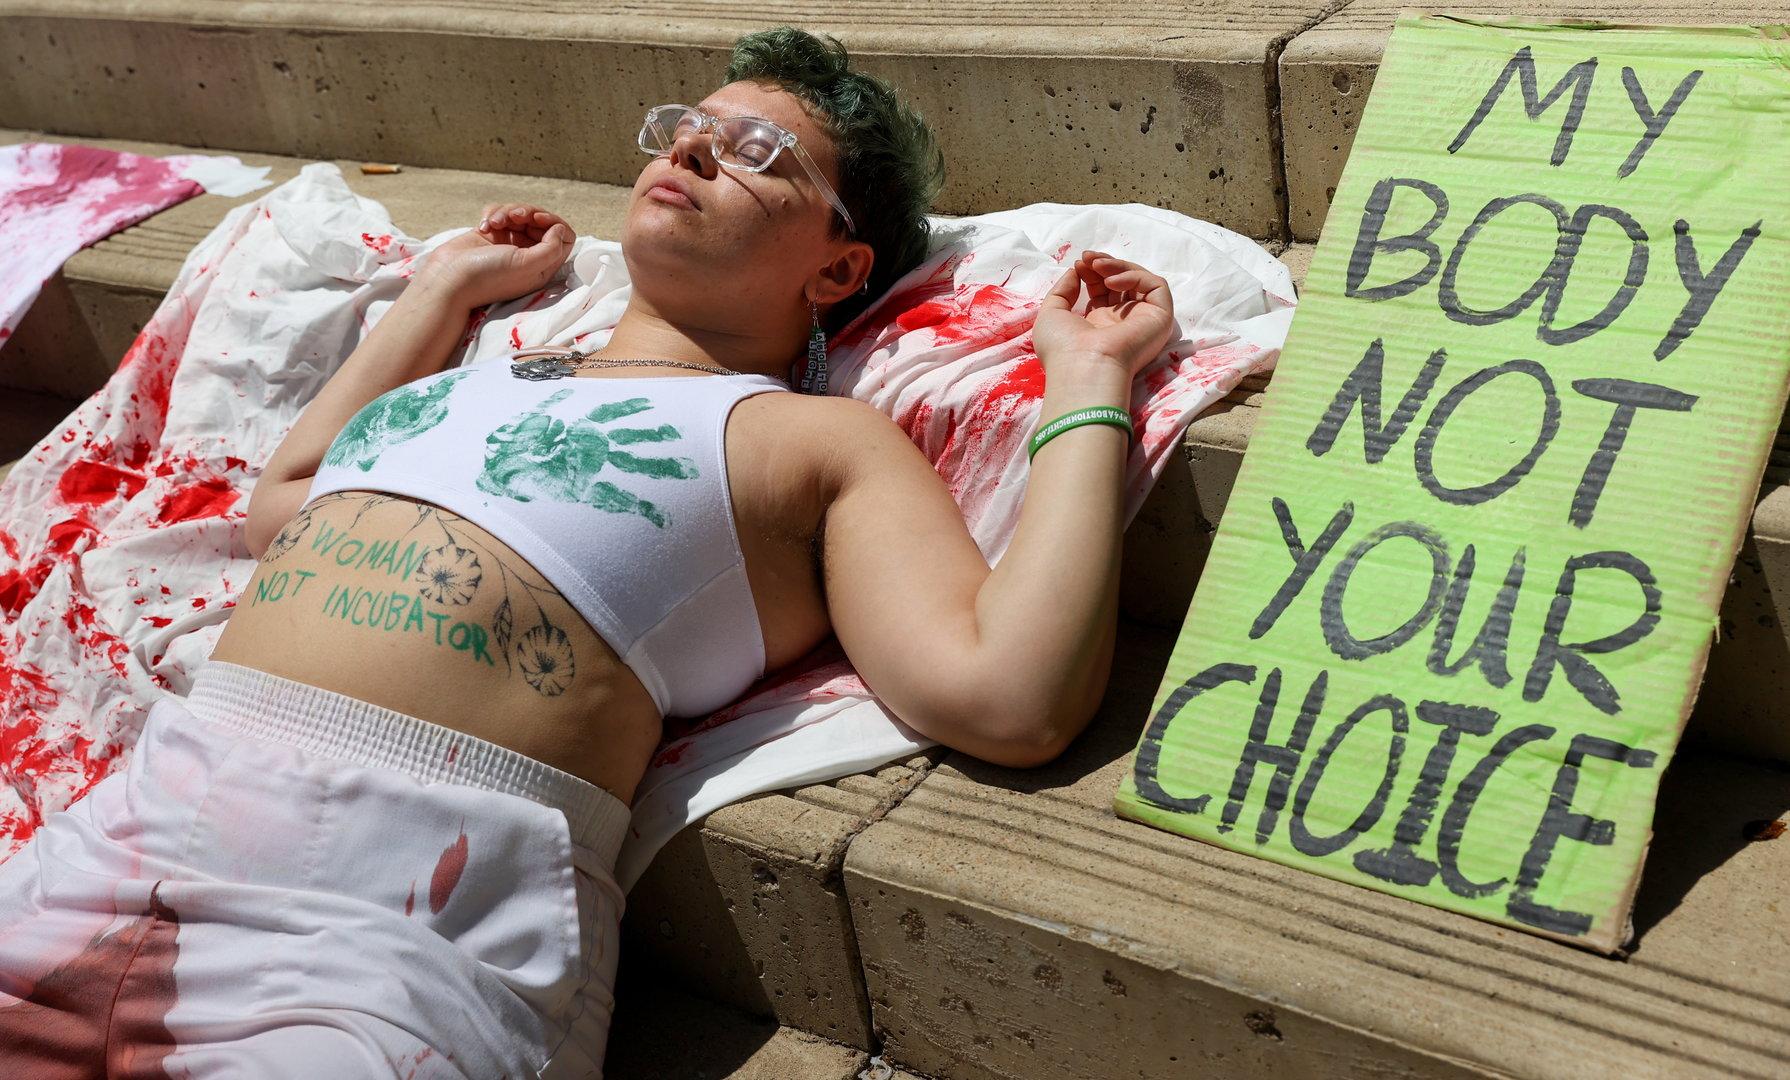 Streit um Abtreibungspille in USA: Gericht will Zugang erschweren